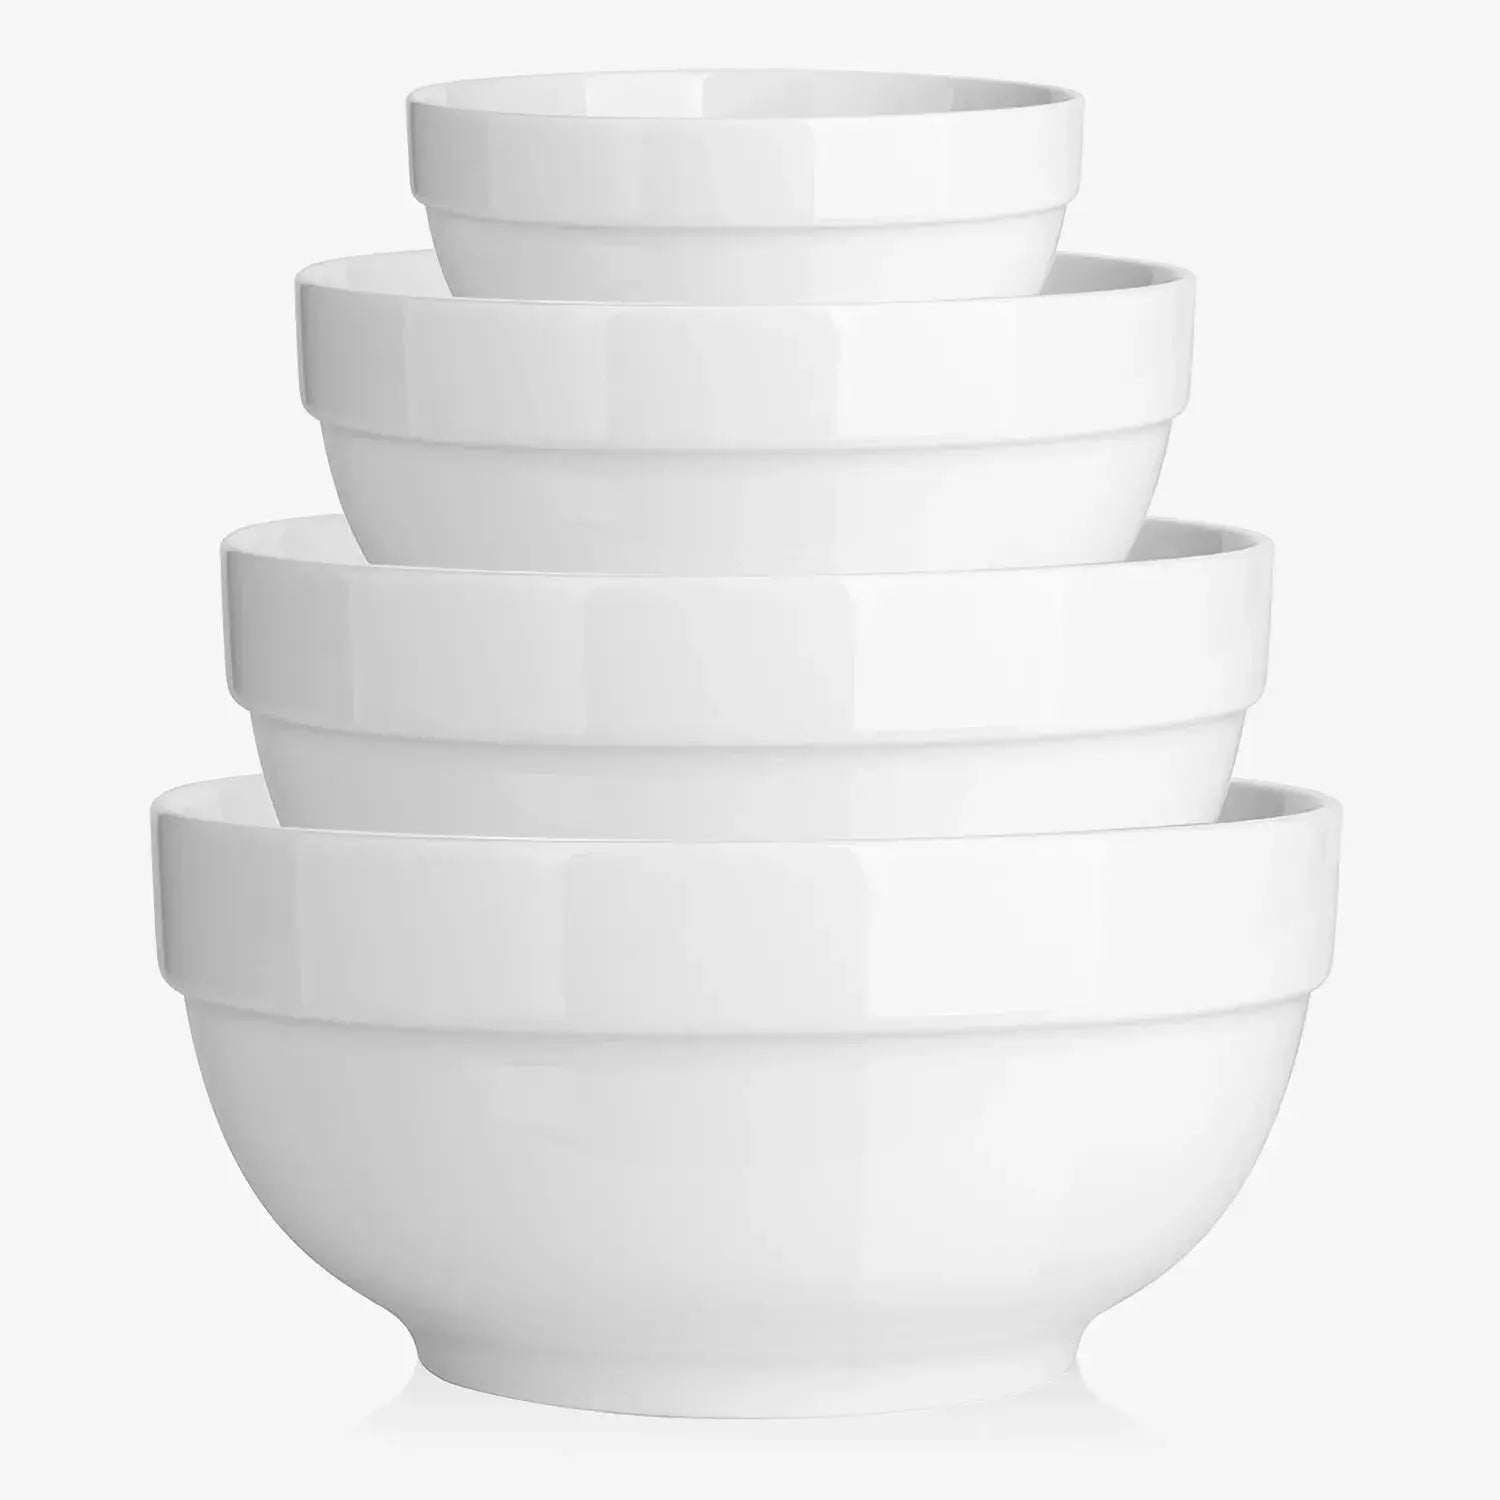 DOWAN Porcelain Bowls Set with Lid, 22 oz Cereal Soup Bowls